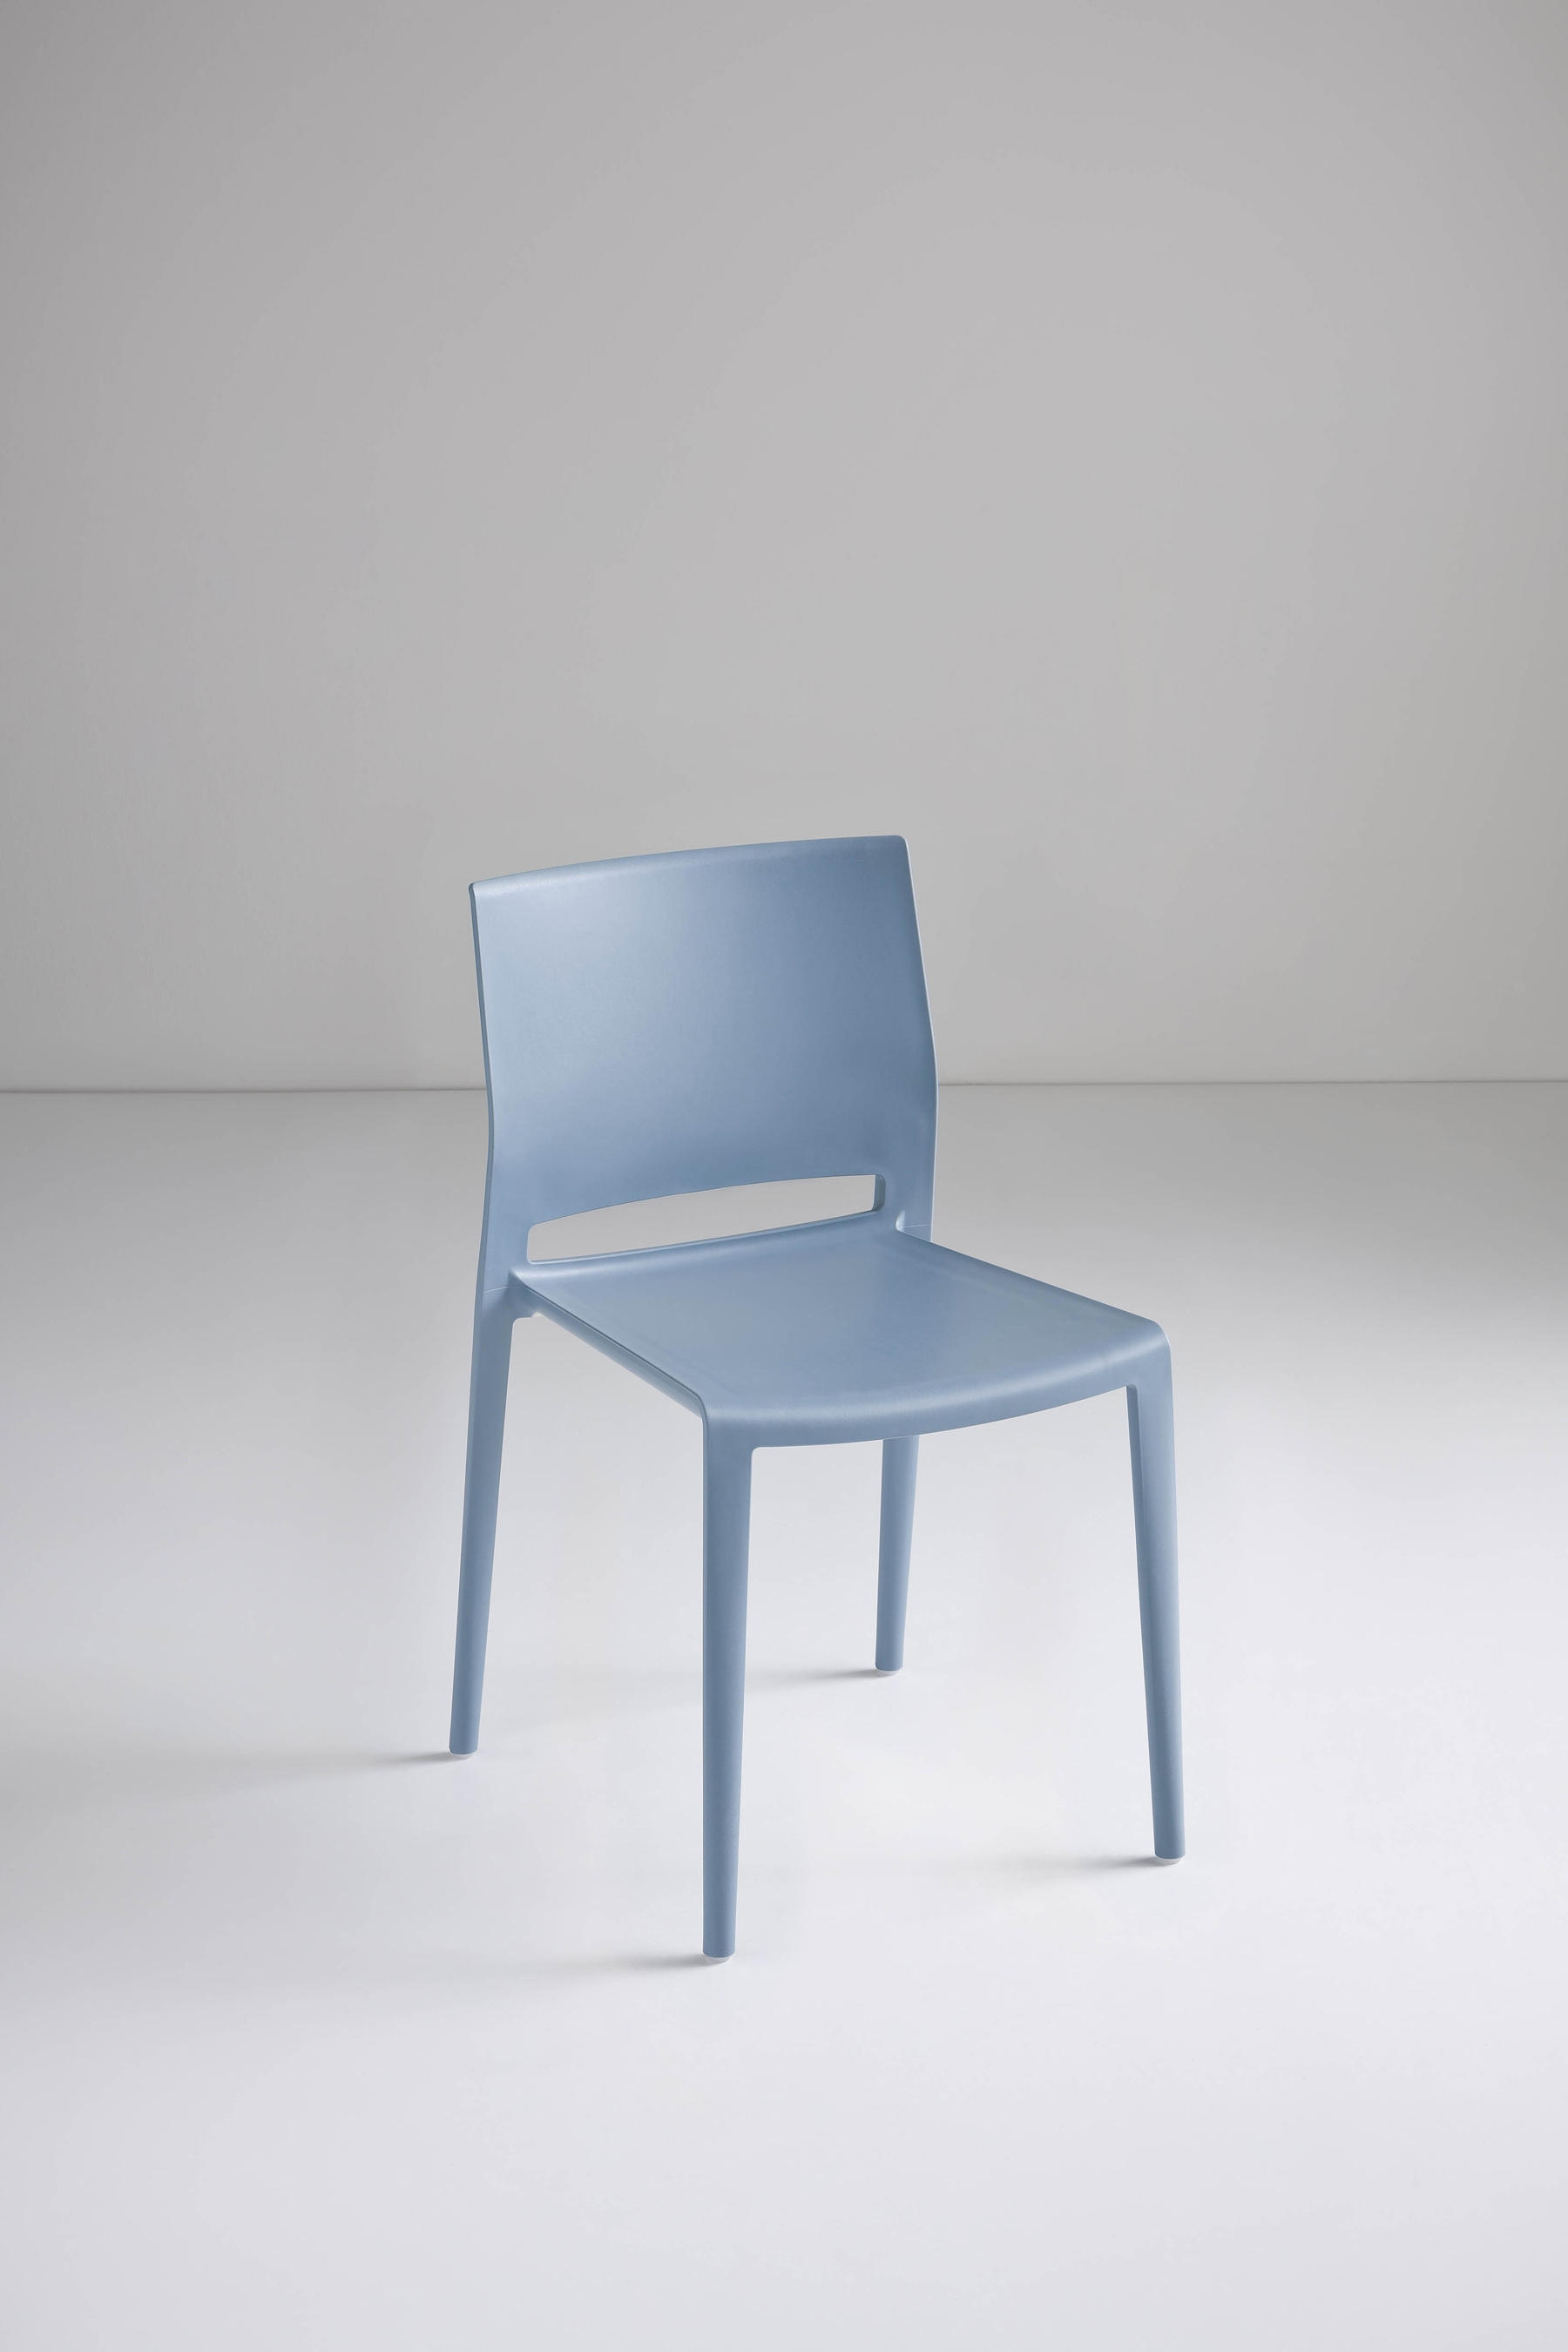 BAKHITA - Chairs from Gaber | Architonic